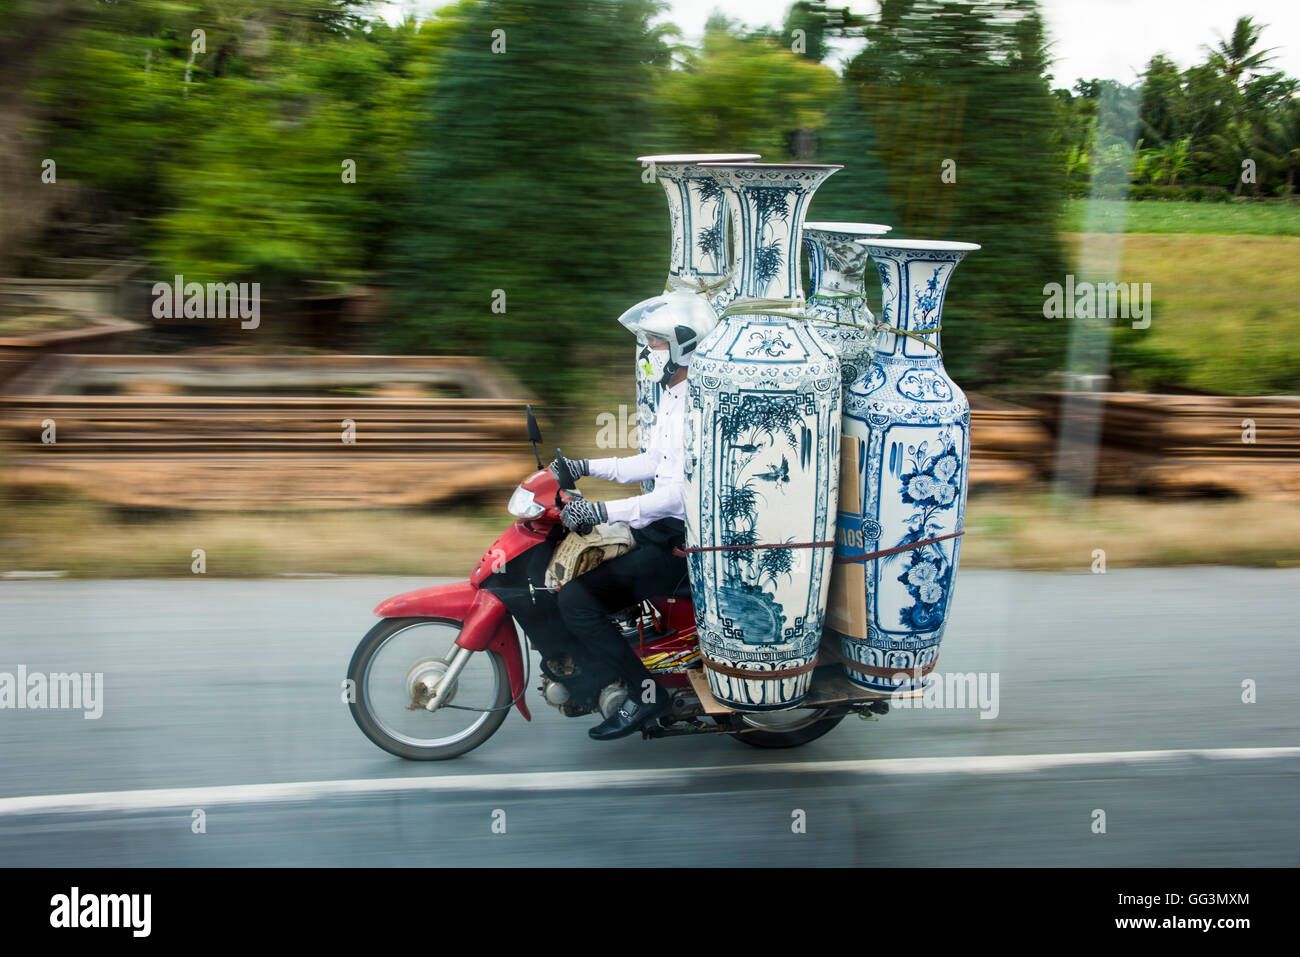 Motorbike carrying vases on the street of Vietnam, near Saigon, countryside Stock Photo